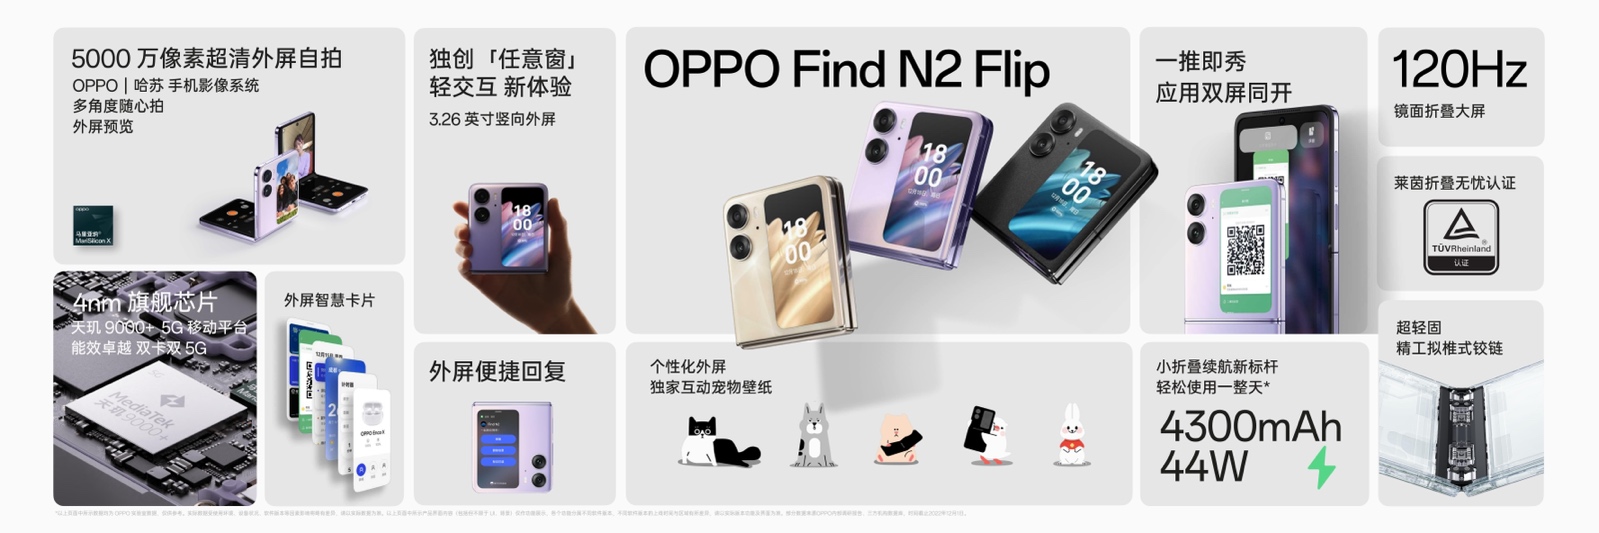 OPPO Find N2 Flip斩获京东、天猫安卓手机5K+价位段销售额双冠军